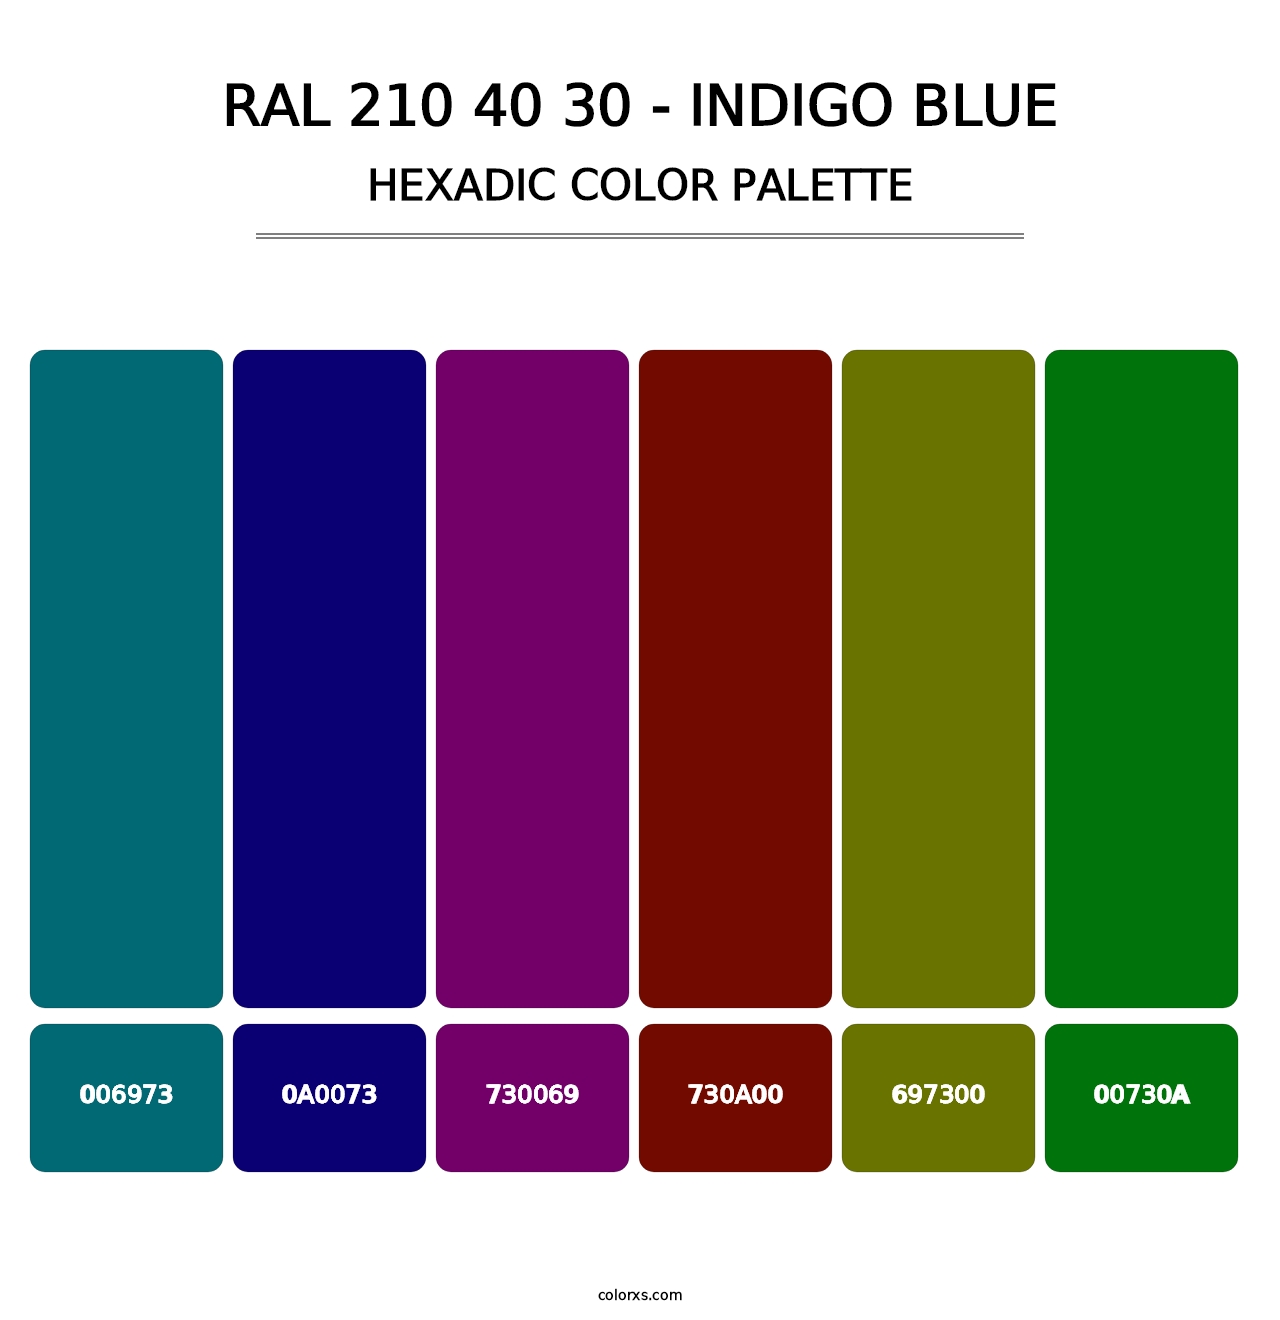 RAL 210 40 30 - Indigo Blue - Hexadic Color Palette